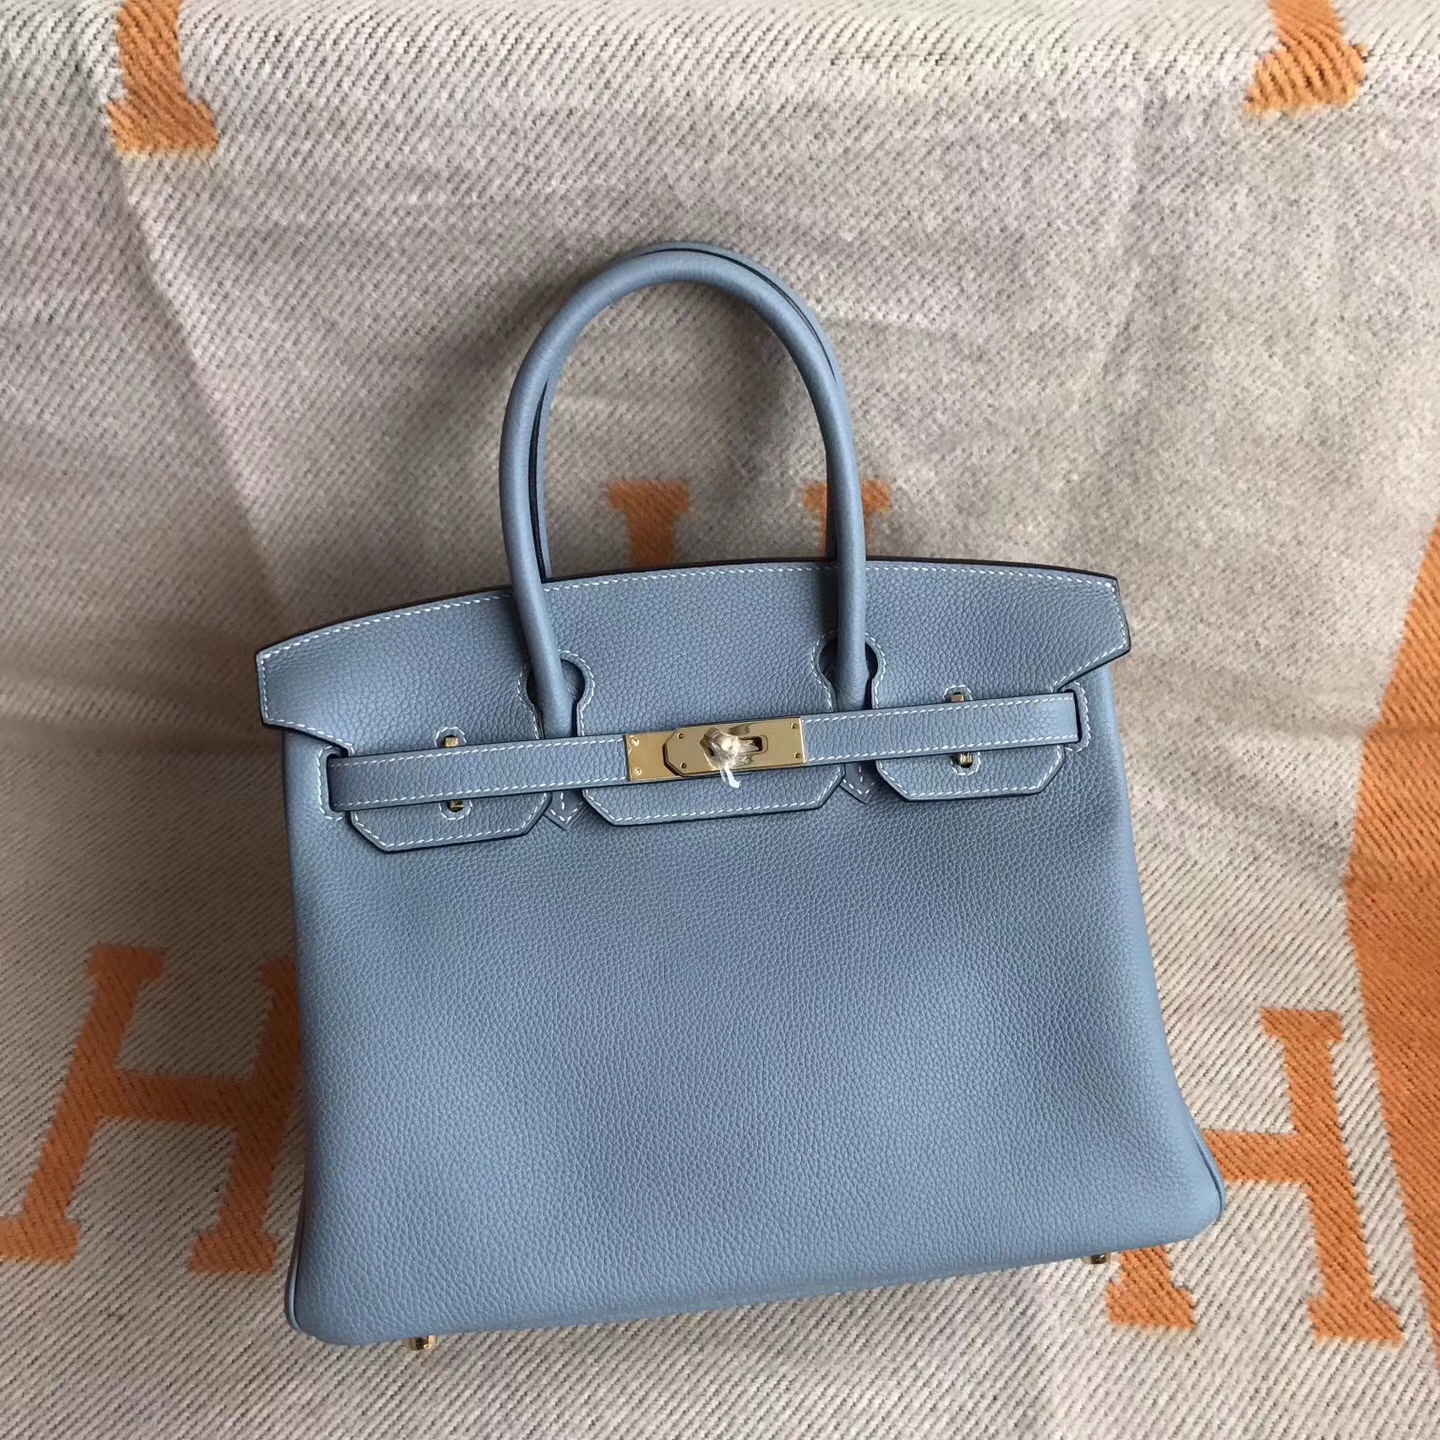 Hand Stitching Hermes Togo Calfskin Birkin Bag30cm in J7 Blue Lin